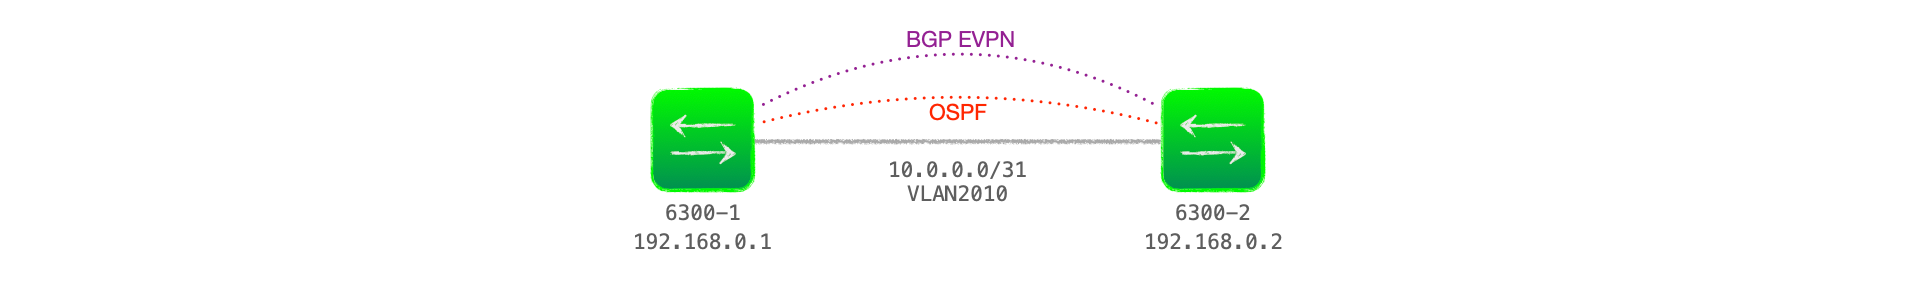 EVPN-VXLAN Explainer 2 - The BGP Session